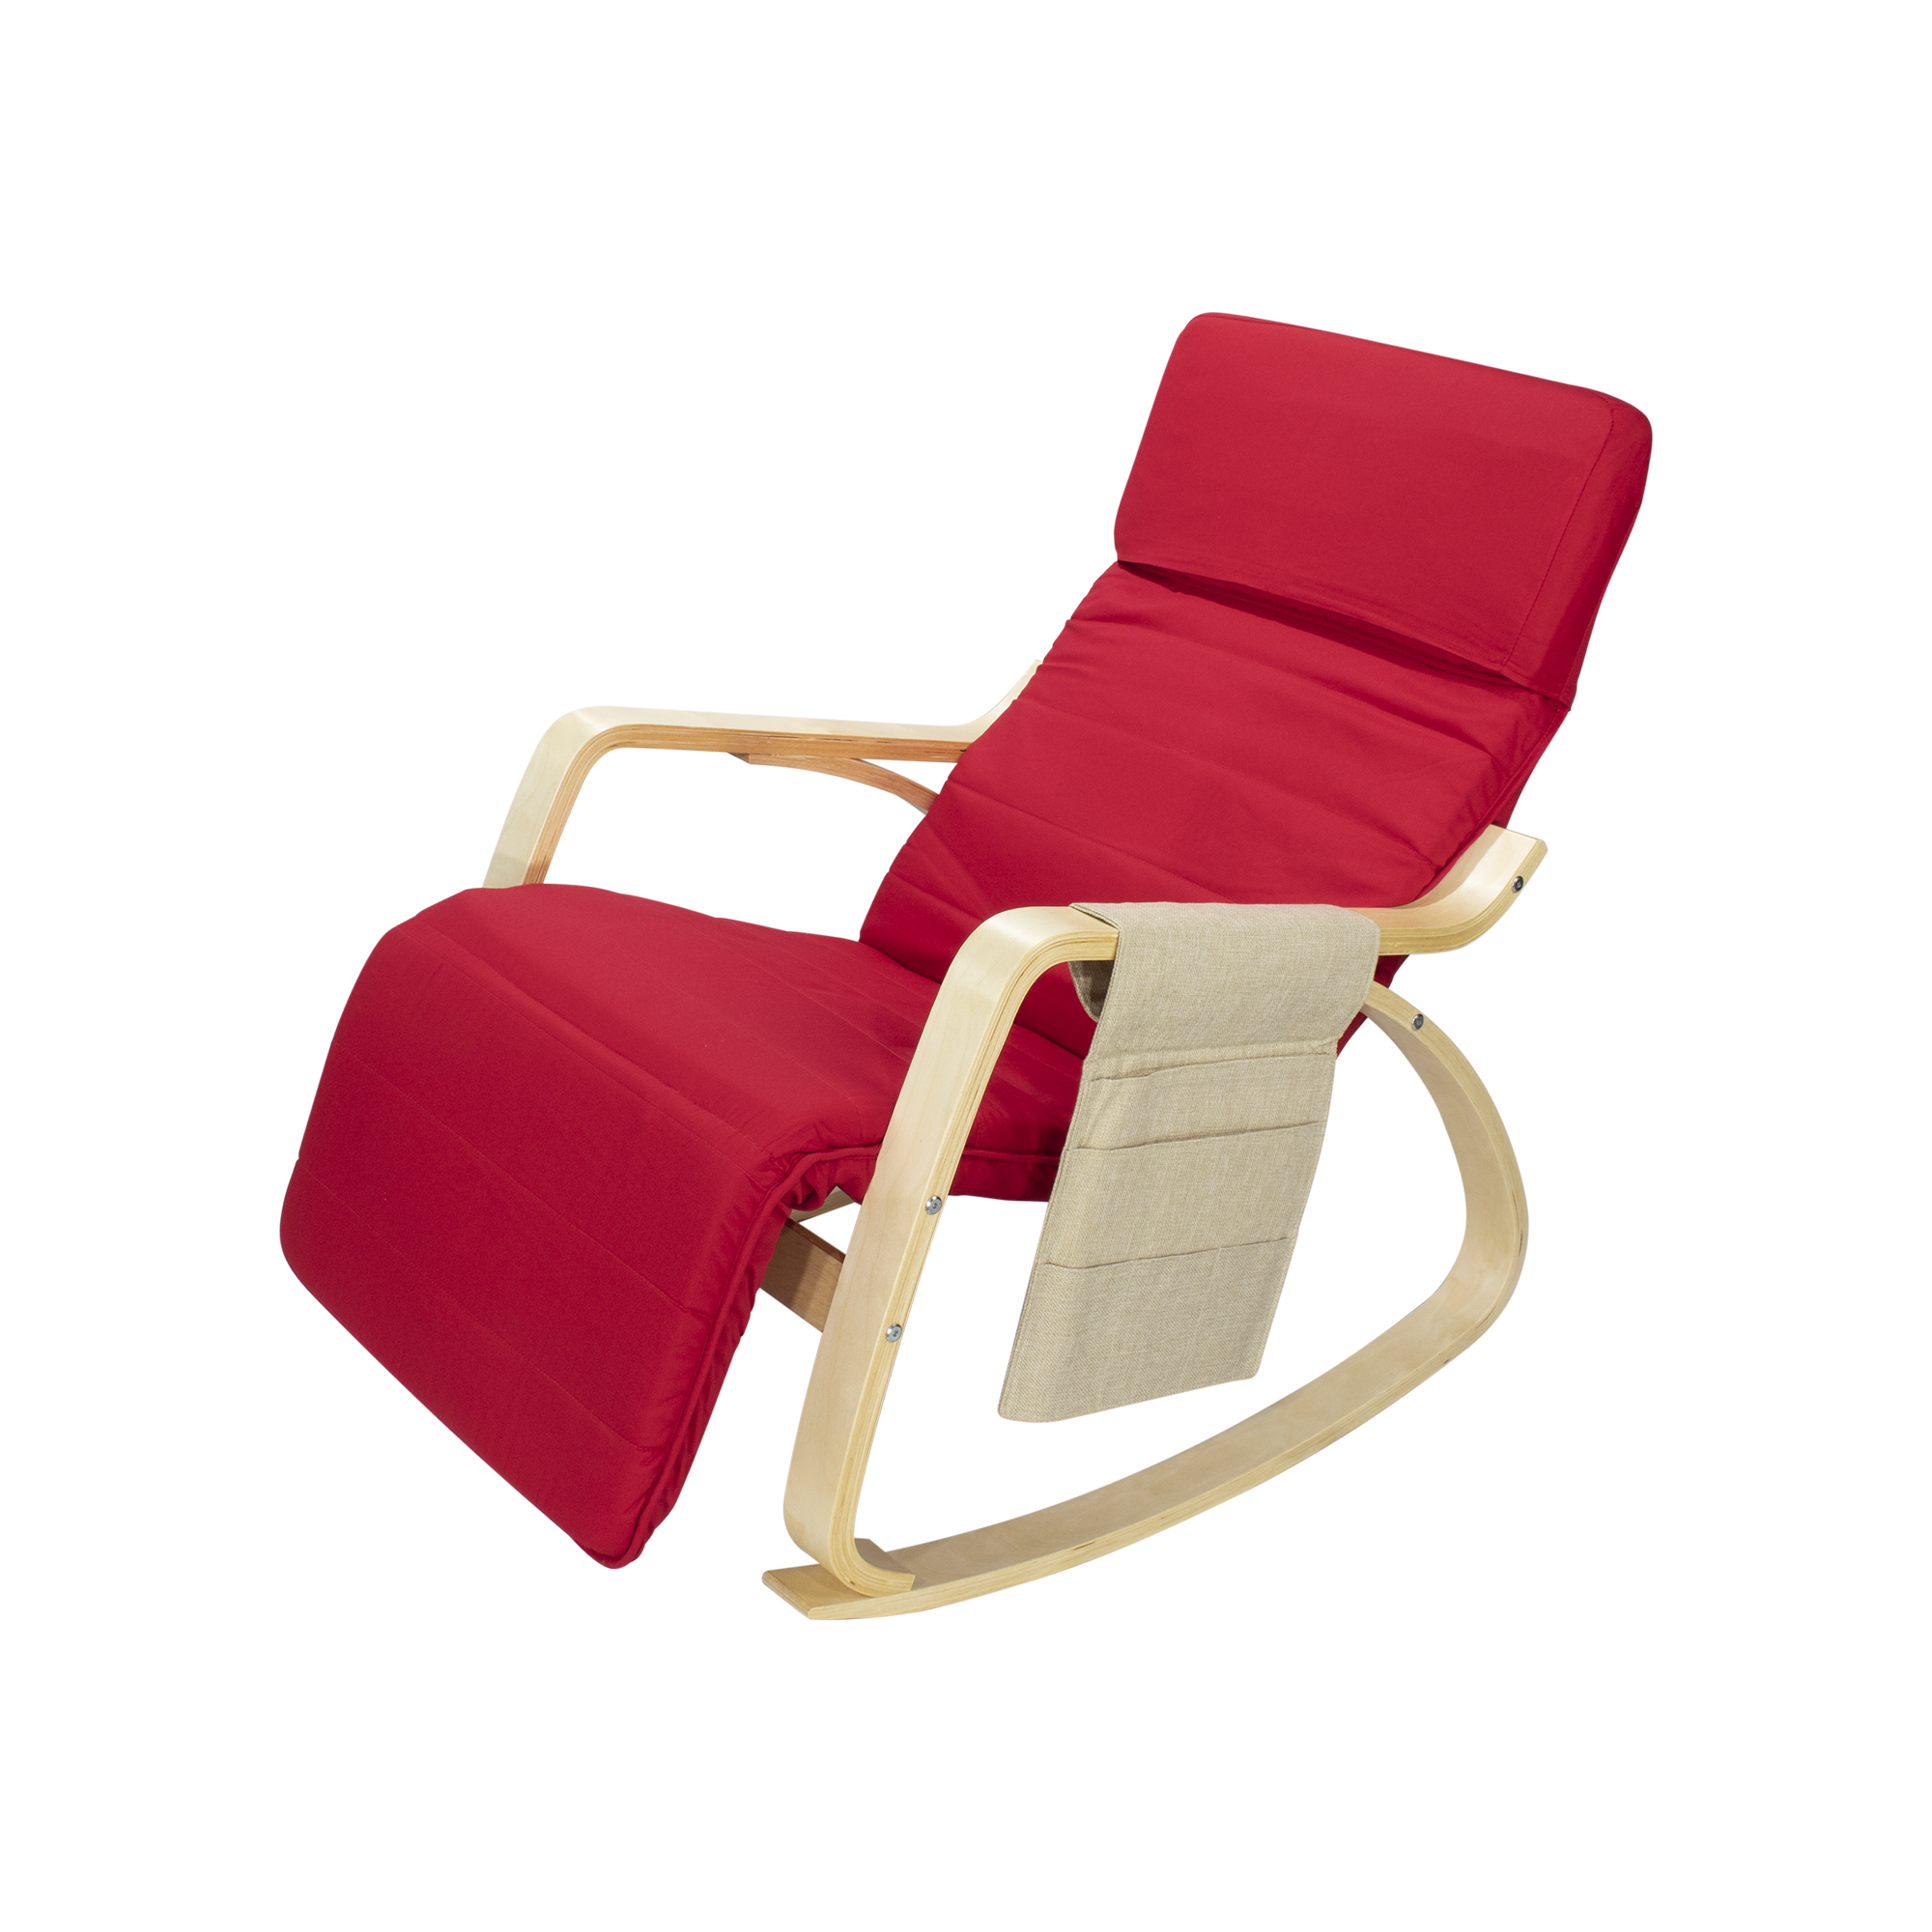 Relaxstuhl Schwingstuhl mit verstellbarem Fussteil D4 - Farbe: Rot